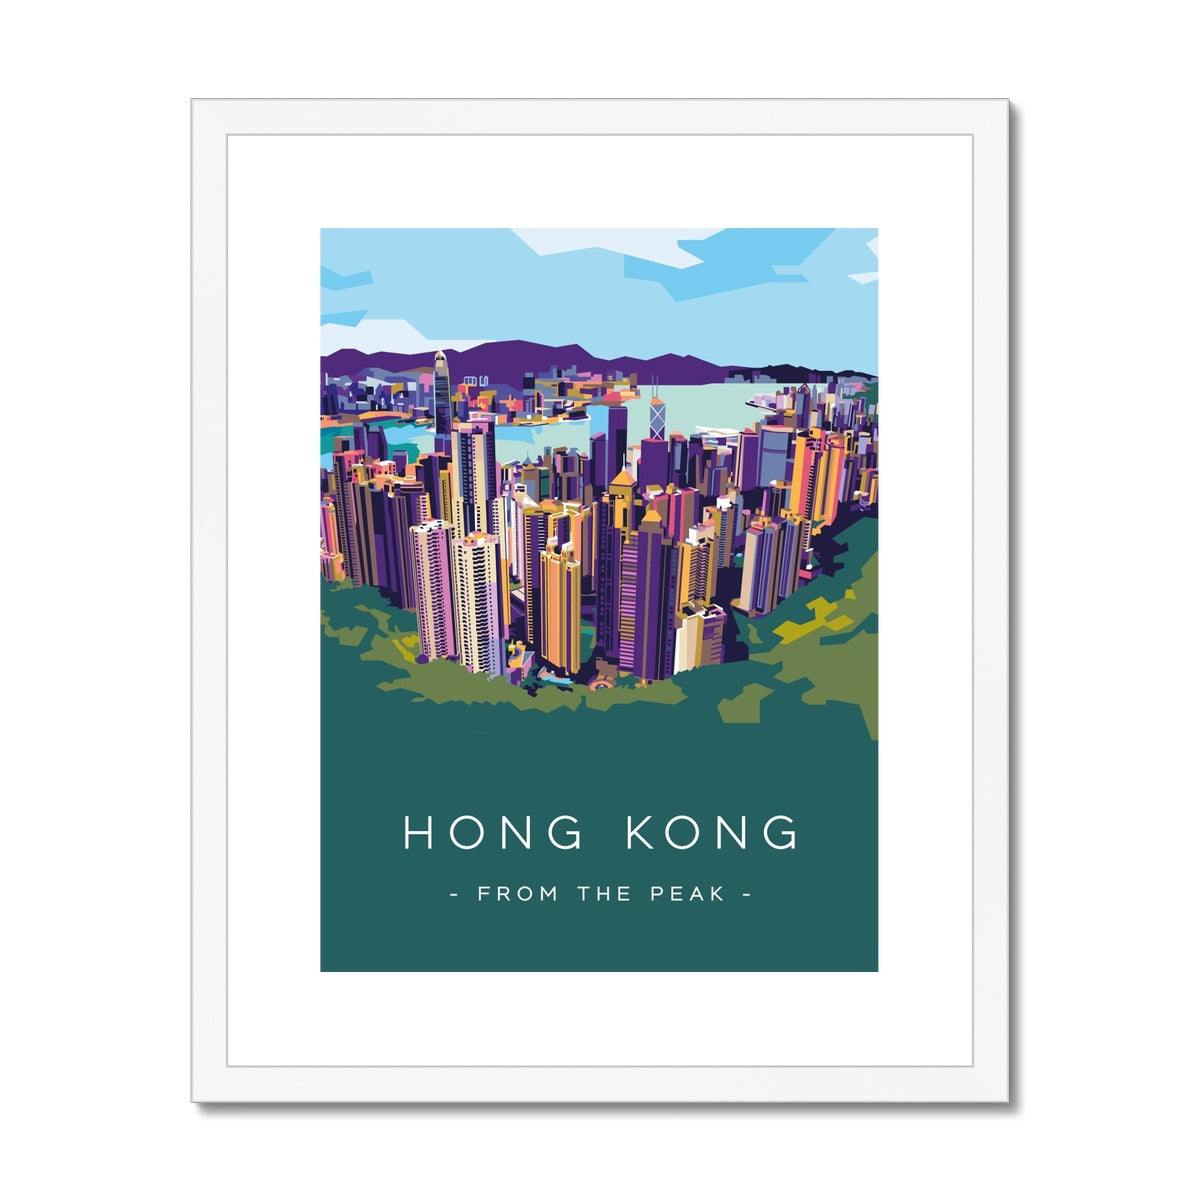 Hong Kong Travel - From the Peak Framed & Mounted Print